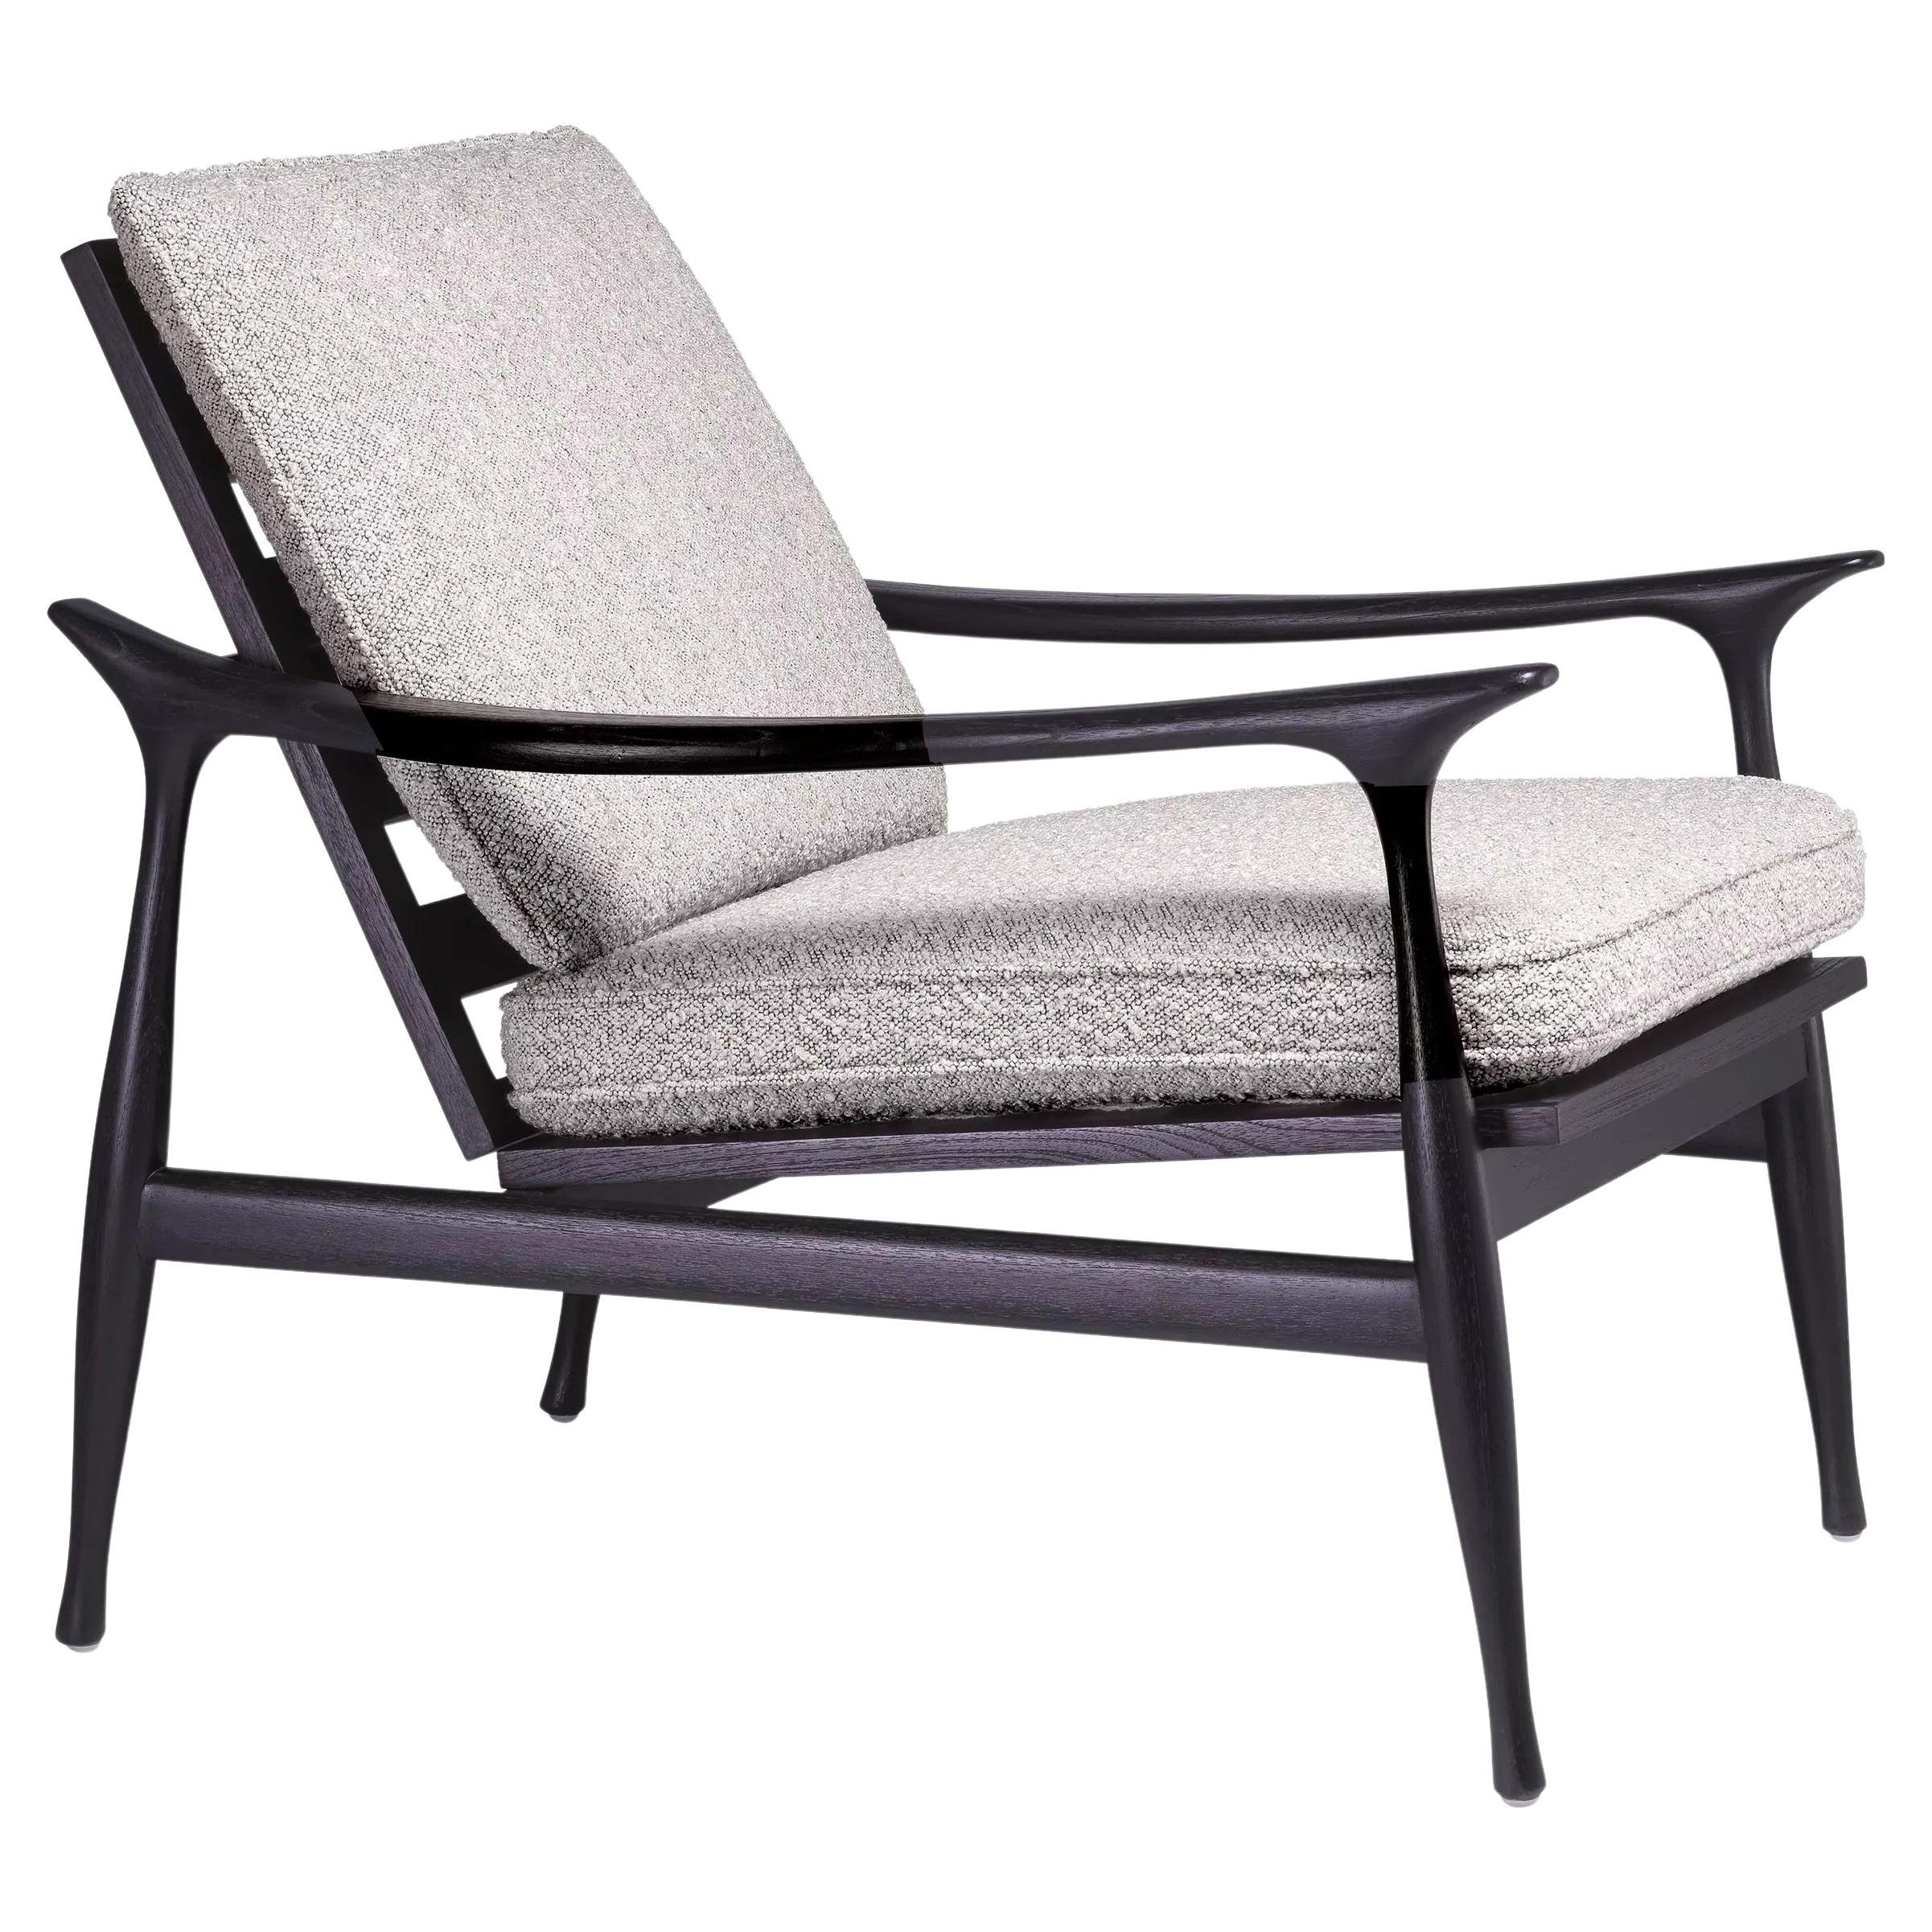 1950s Danish Design and Scandinavian Style Wooden and Bouclé Fabric Armchair